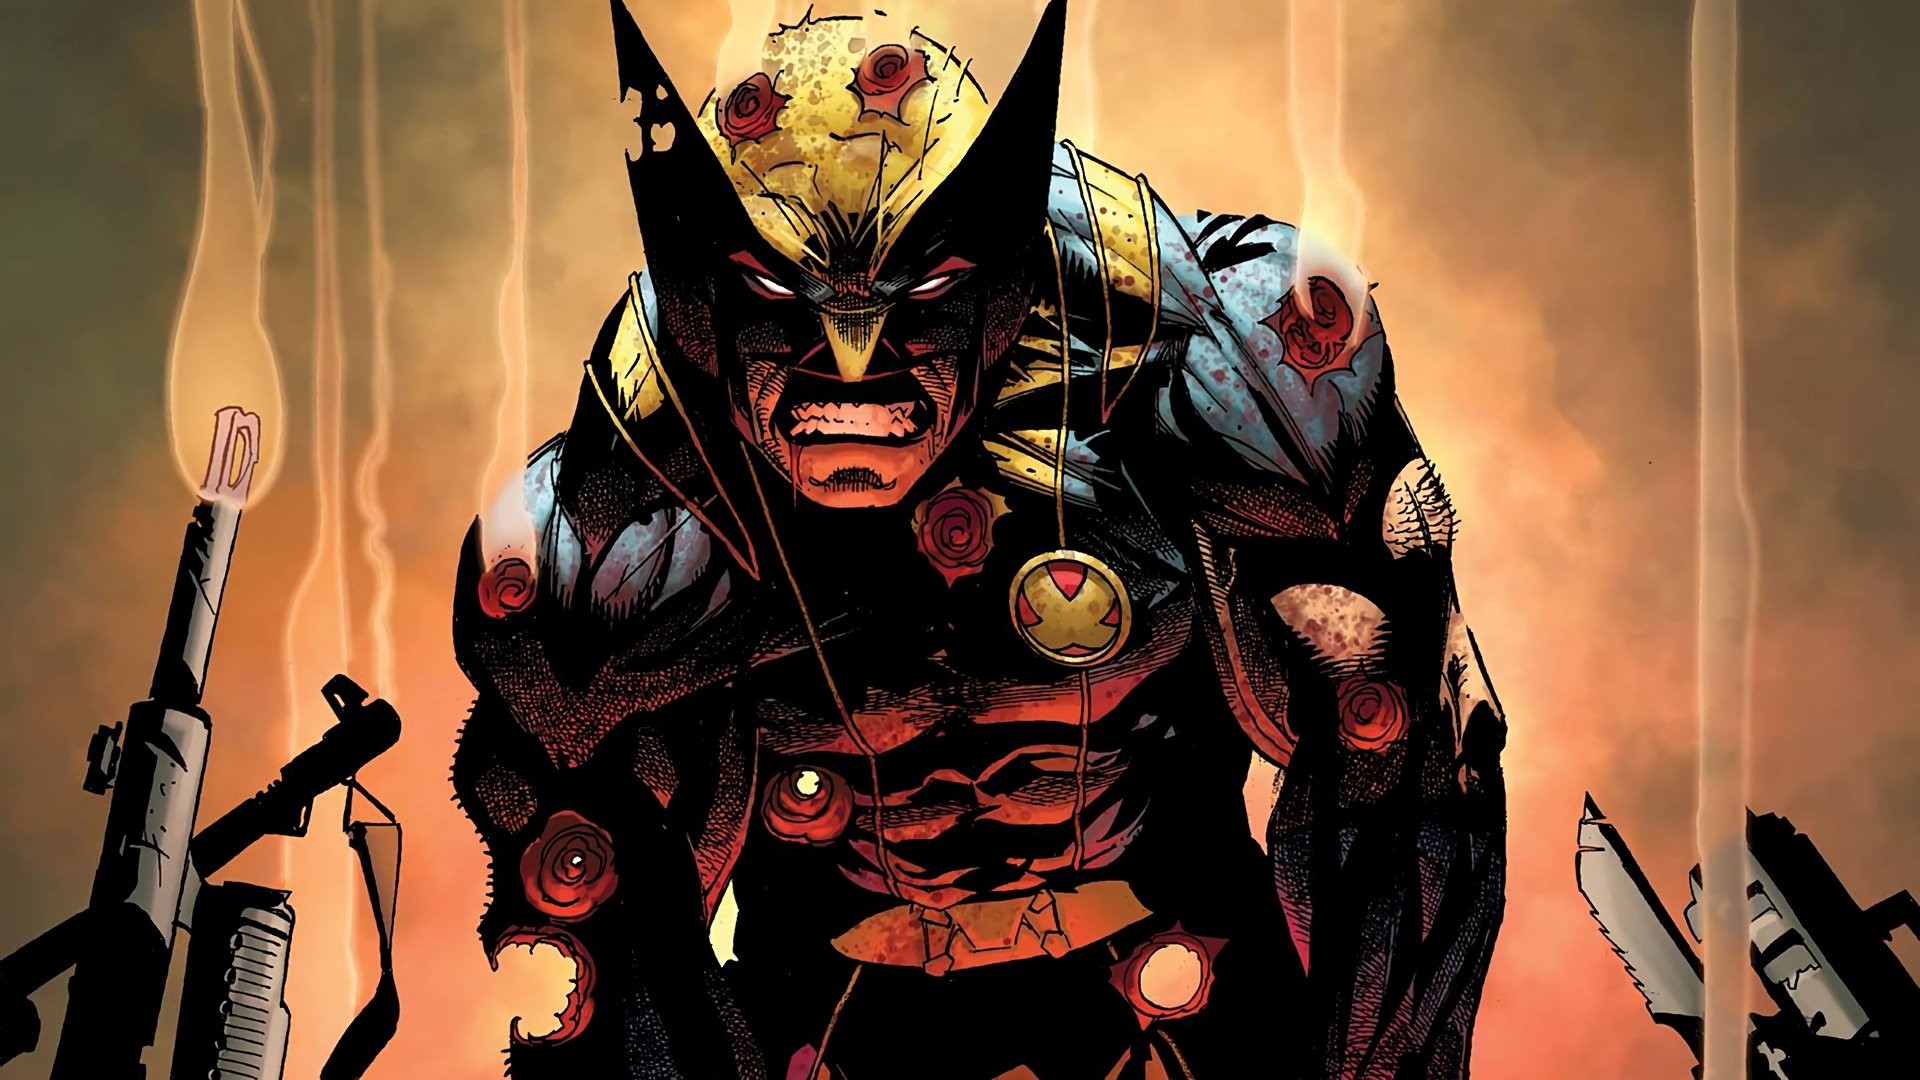 wolverine wallpaper,fictional character,superhero,fiction,comics,batman